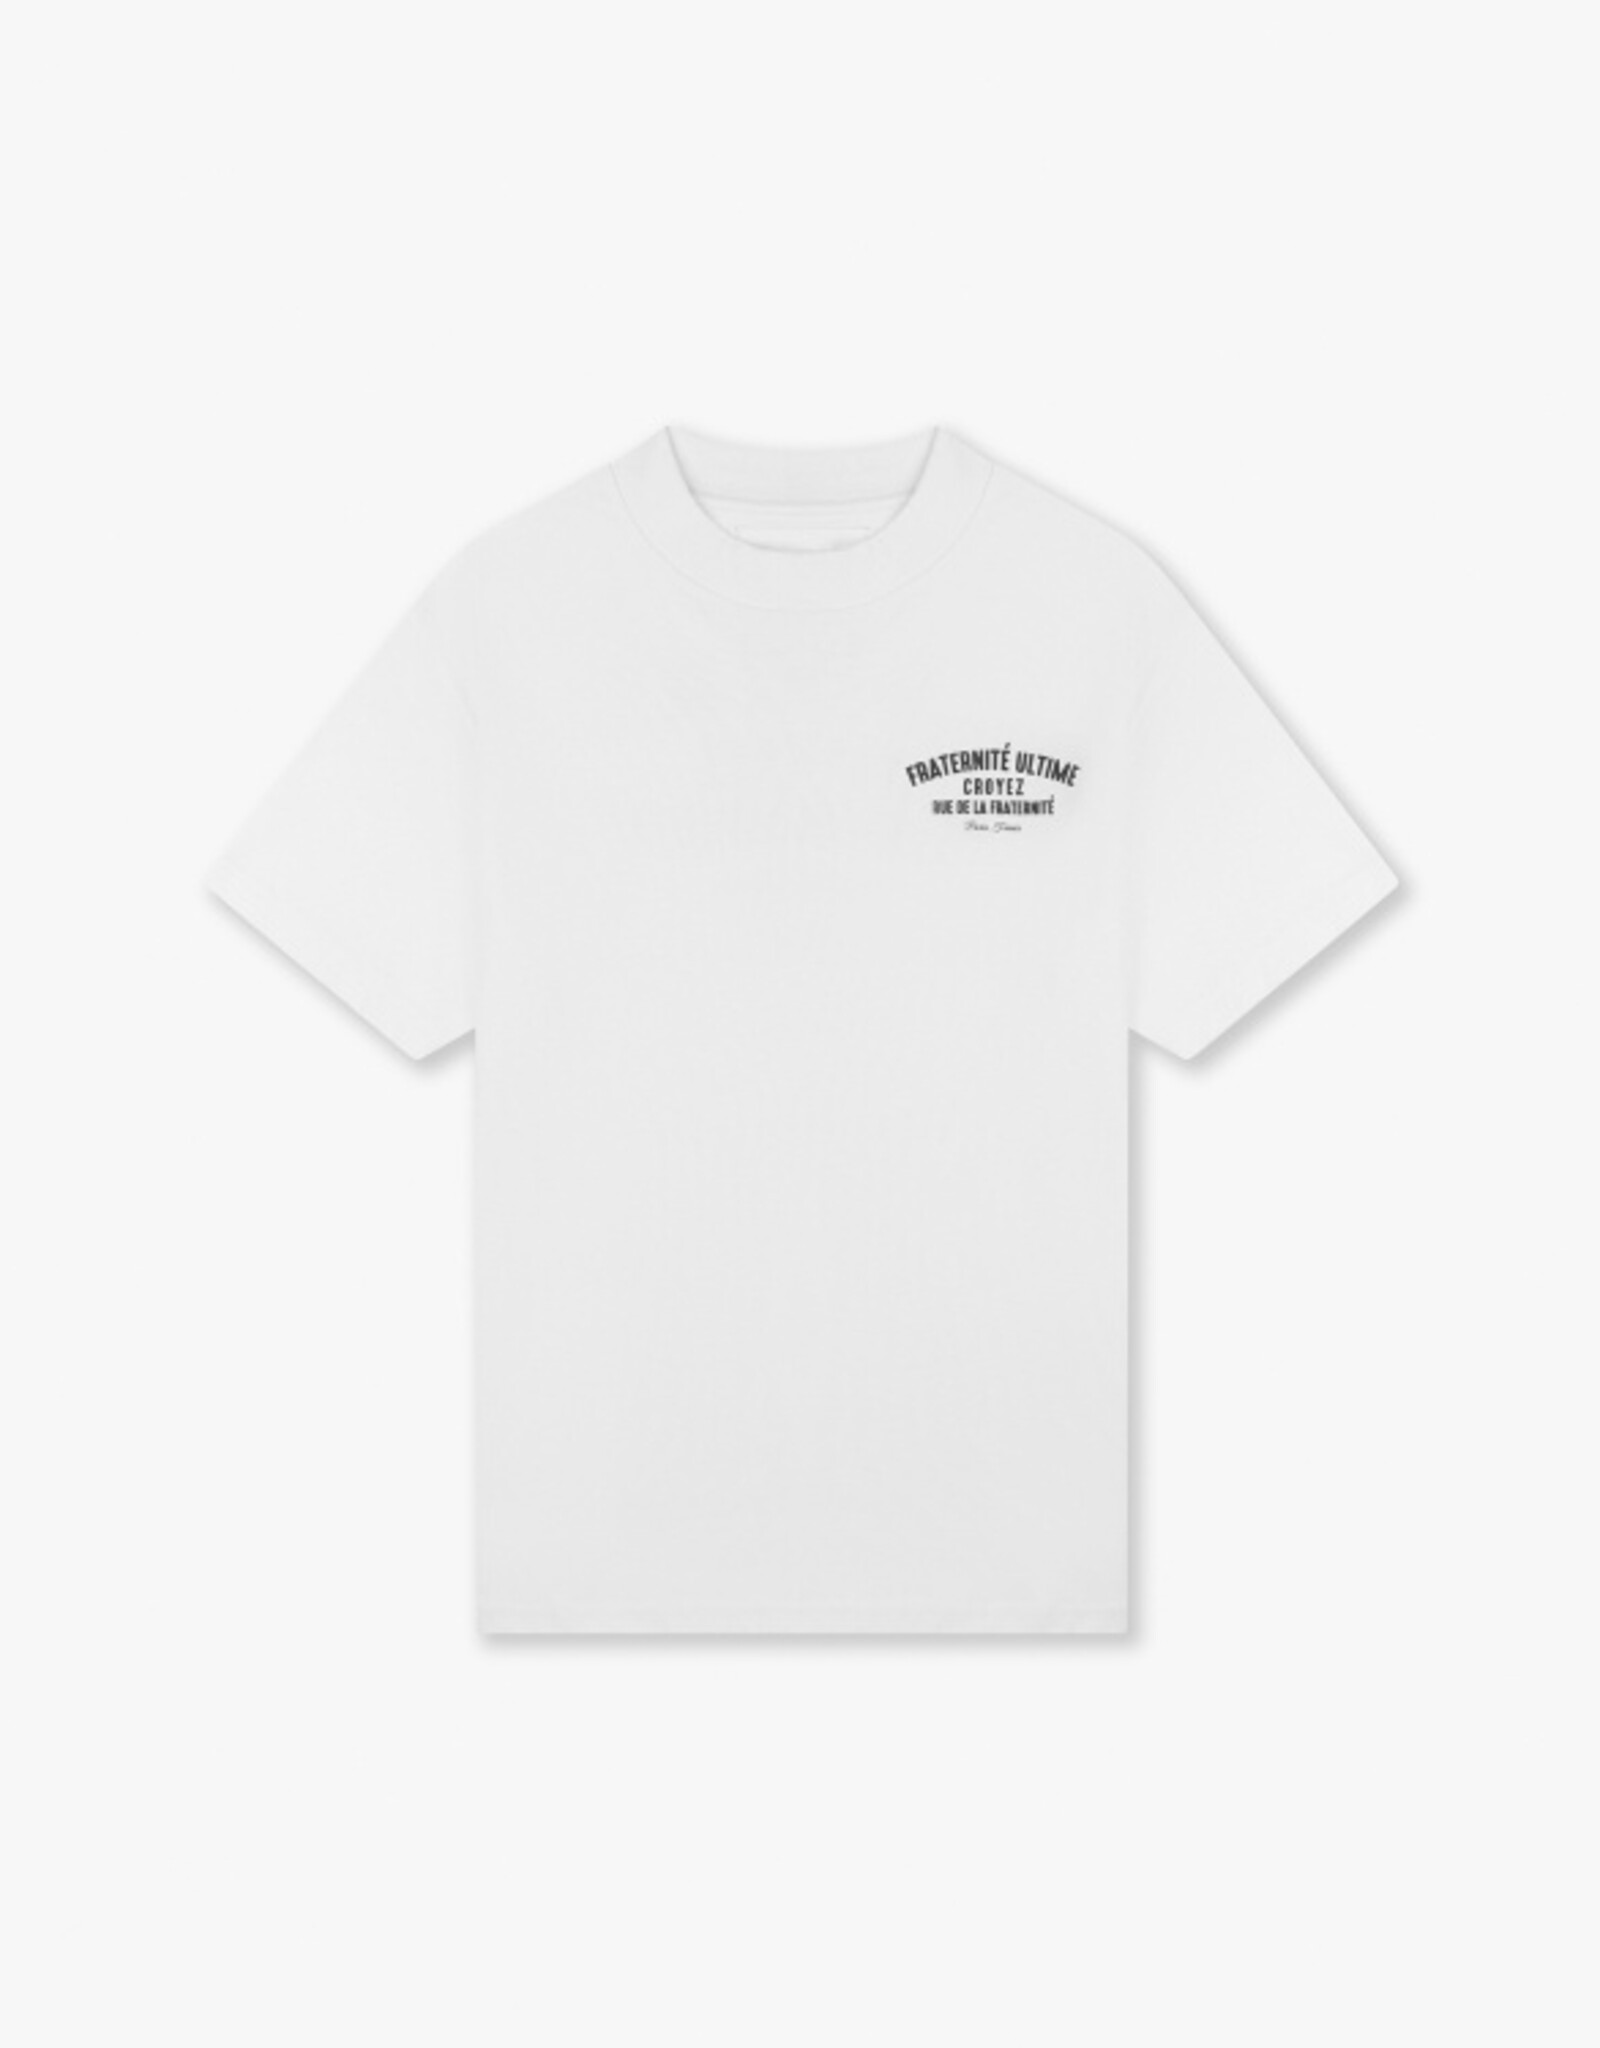 Croyez Fraternite Puff T-Shirt